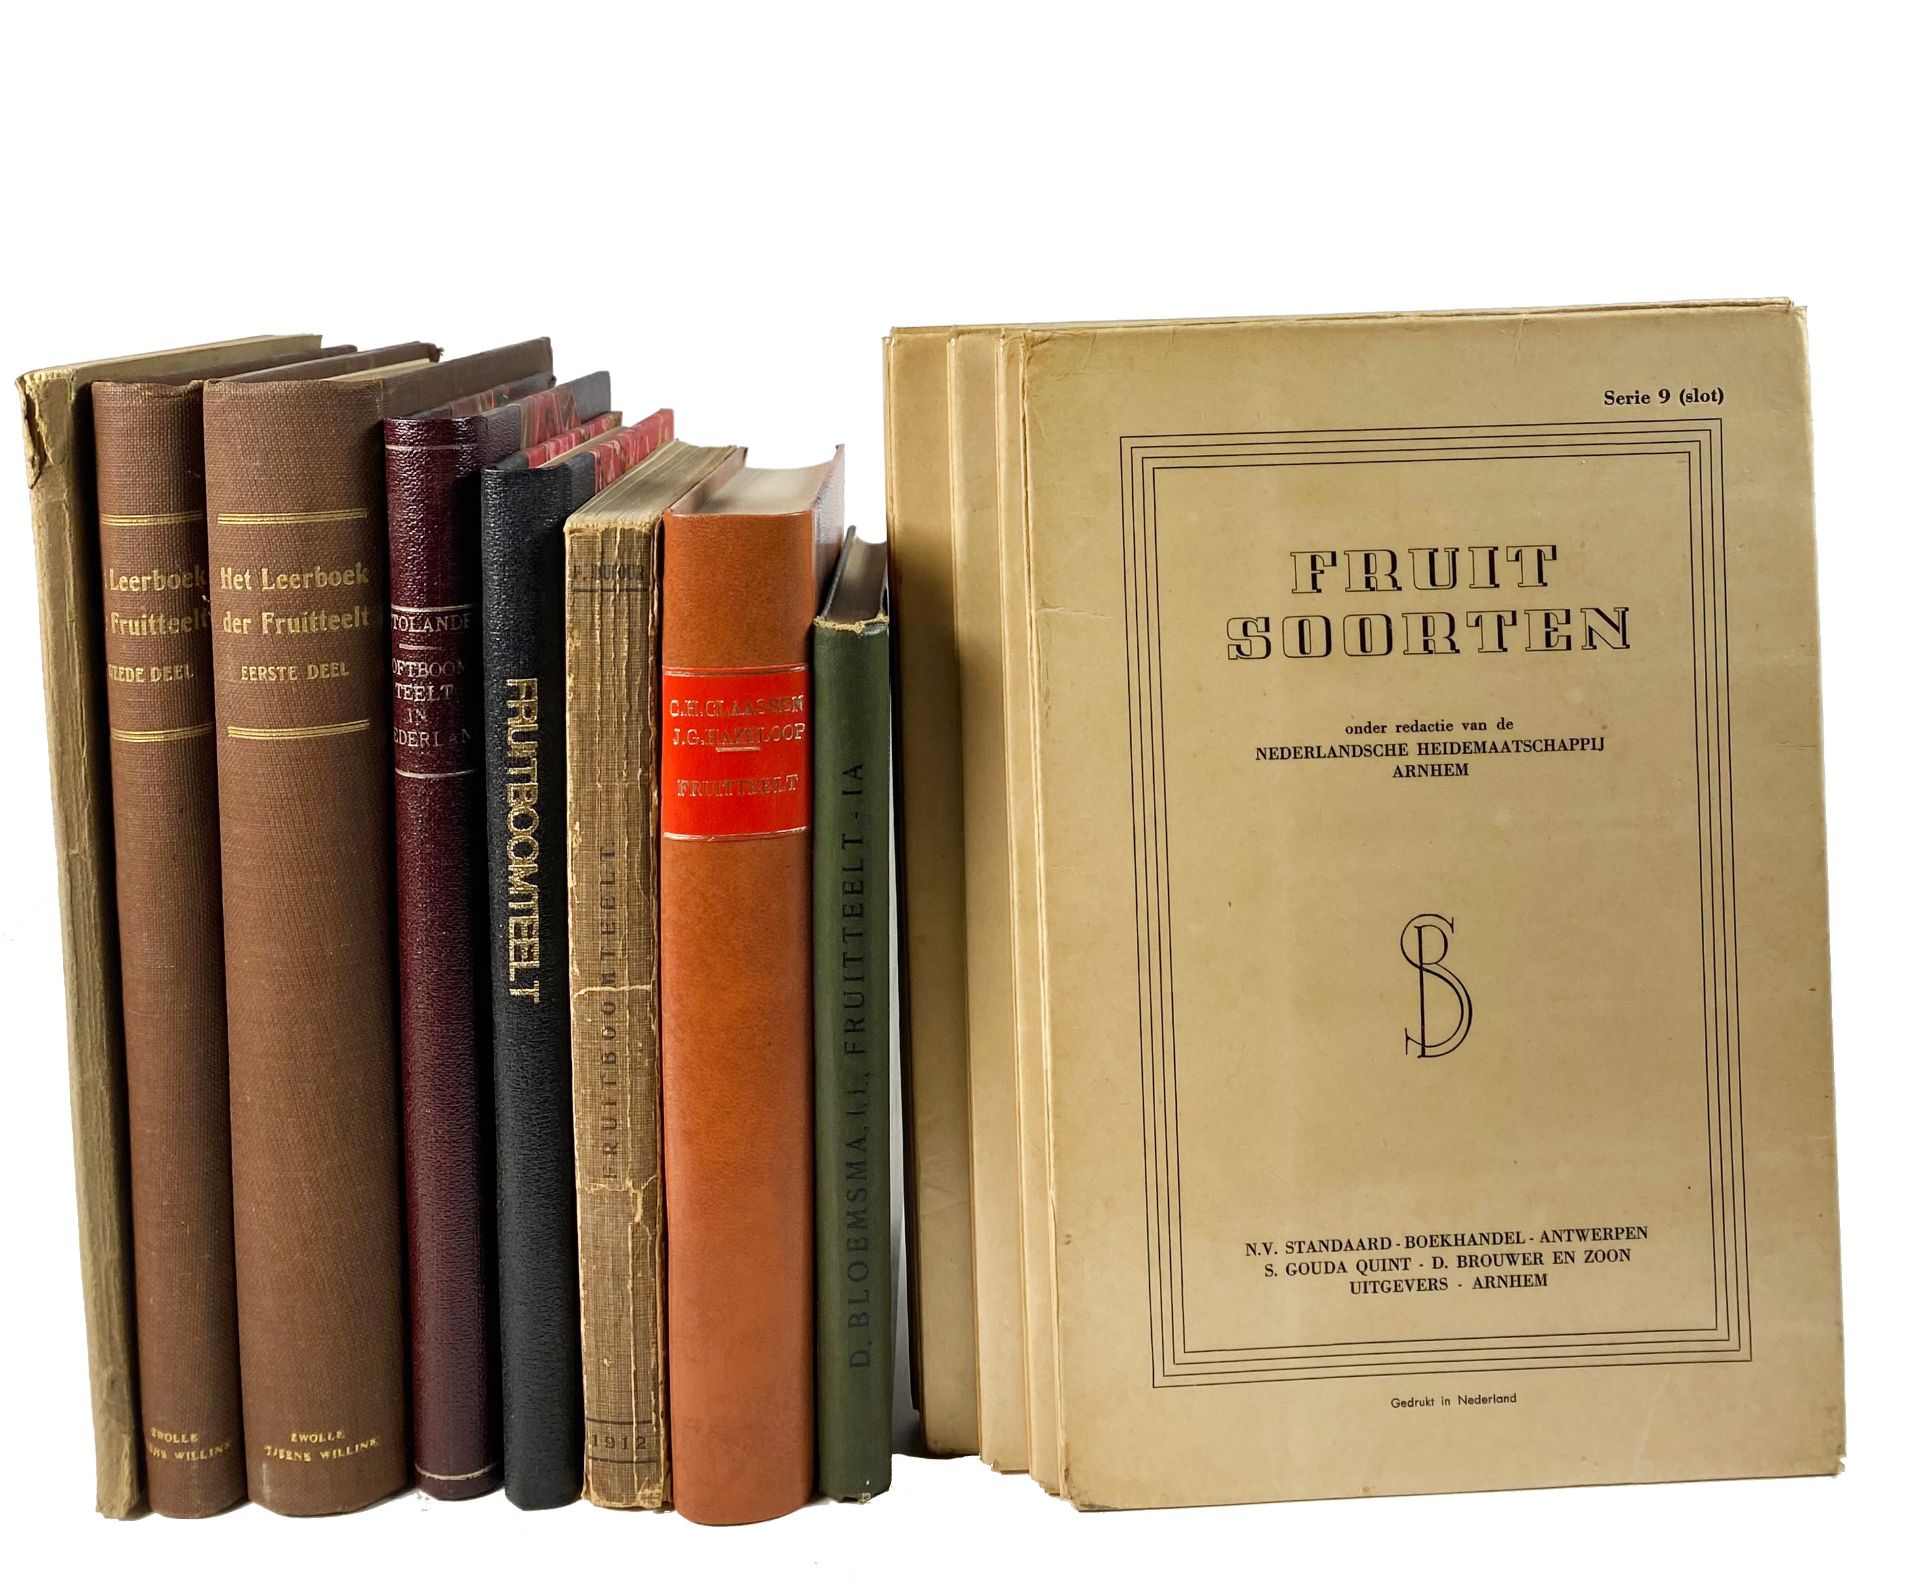 DUFOUR, F. Volledig handboek over fruitboomteelt. (N.d., c. 1915). Prof. ill. Or